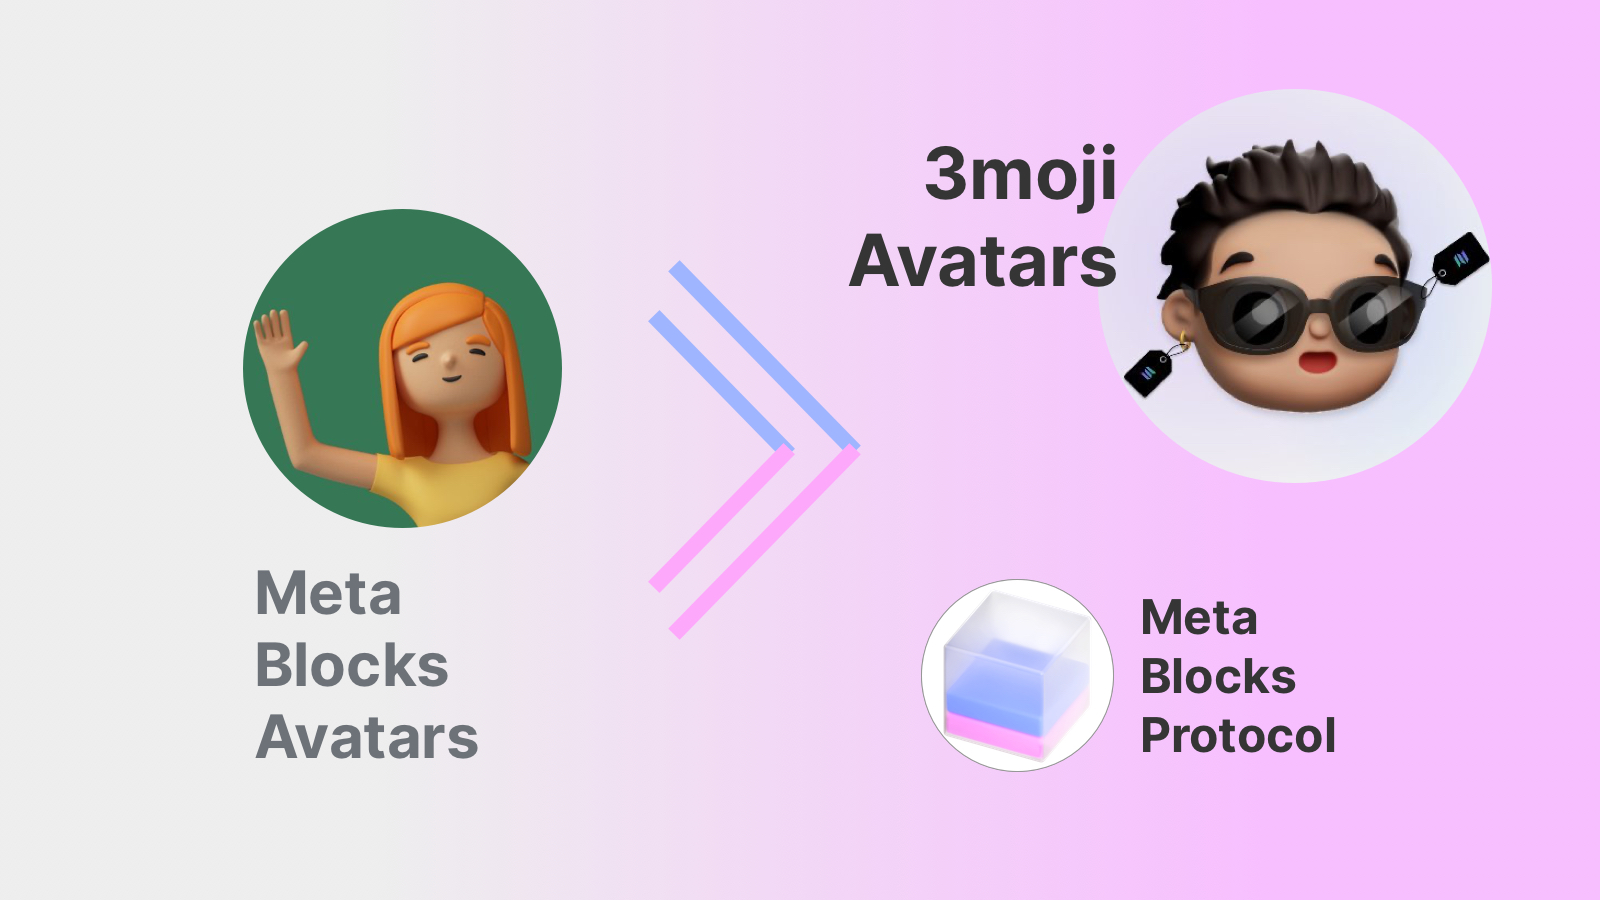 Meta Blocks avatars are now called 3moji - cover image